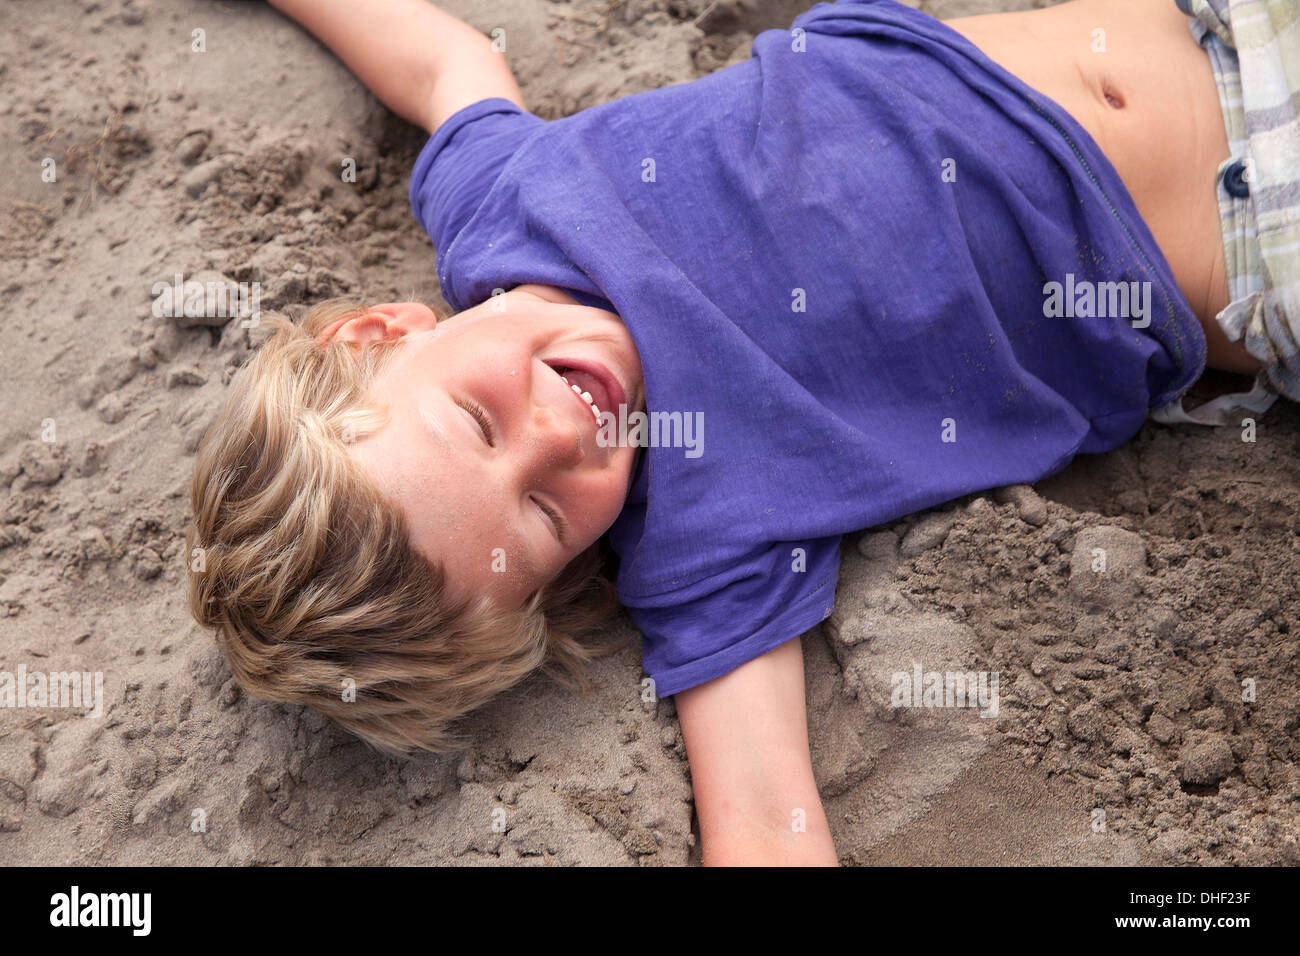 Boy lying on sand laughing, Wales, UK Stock Photo